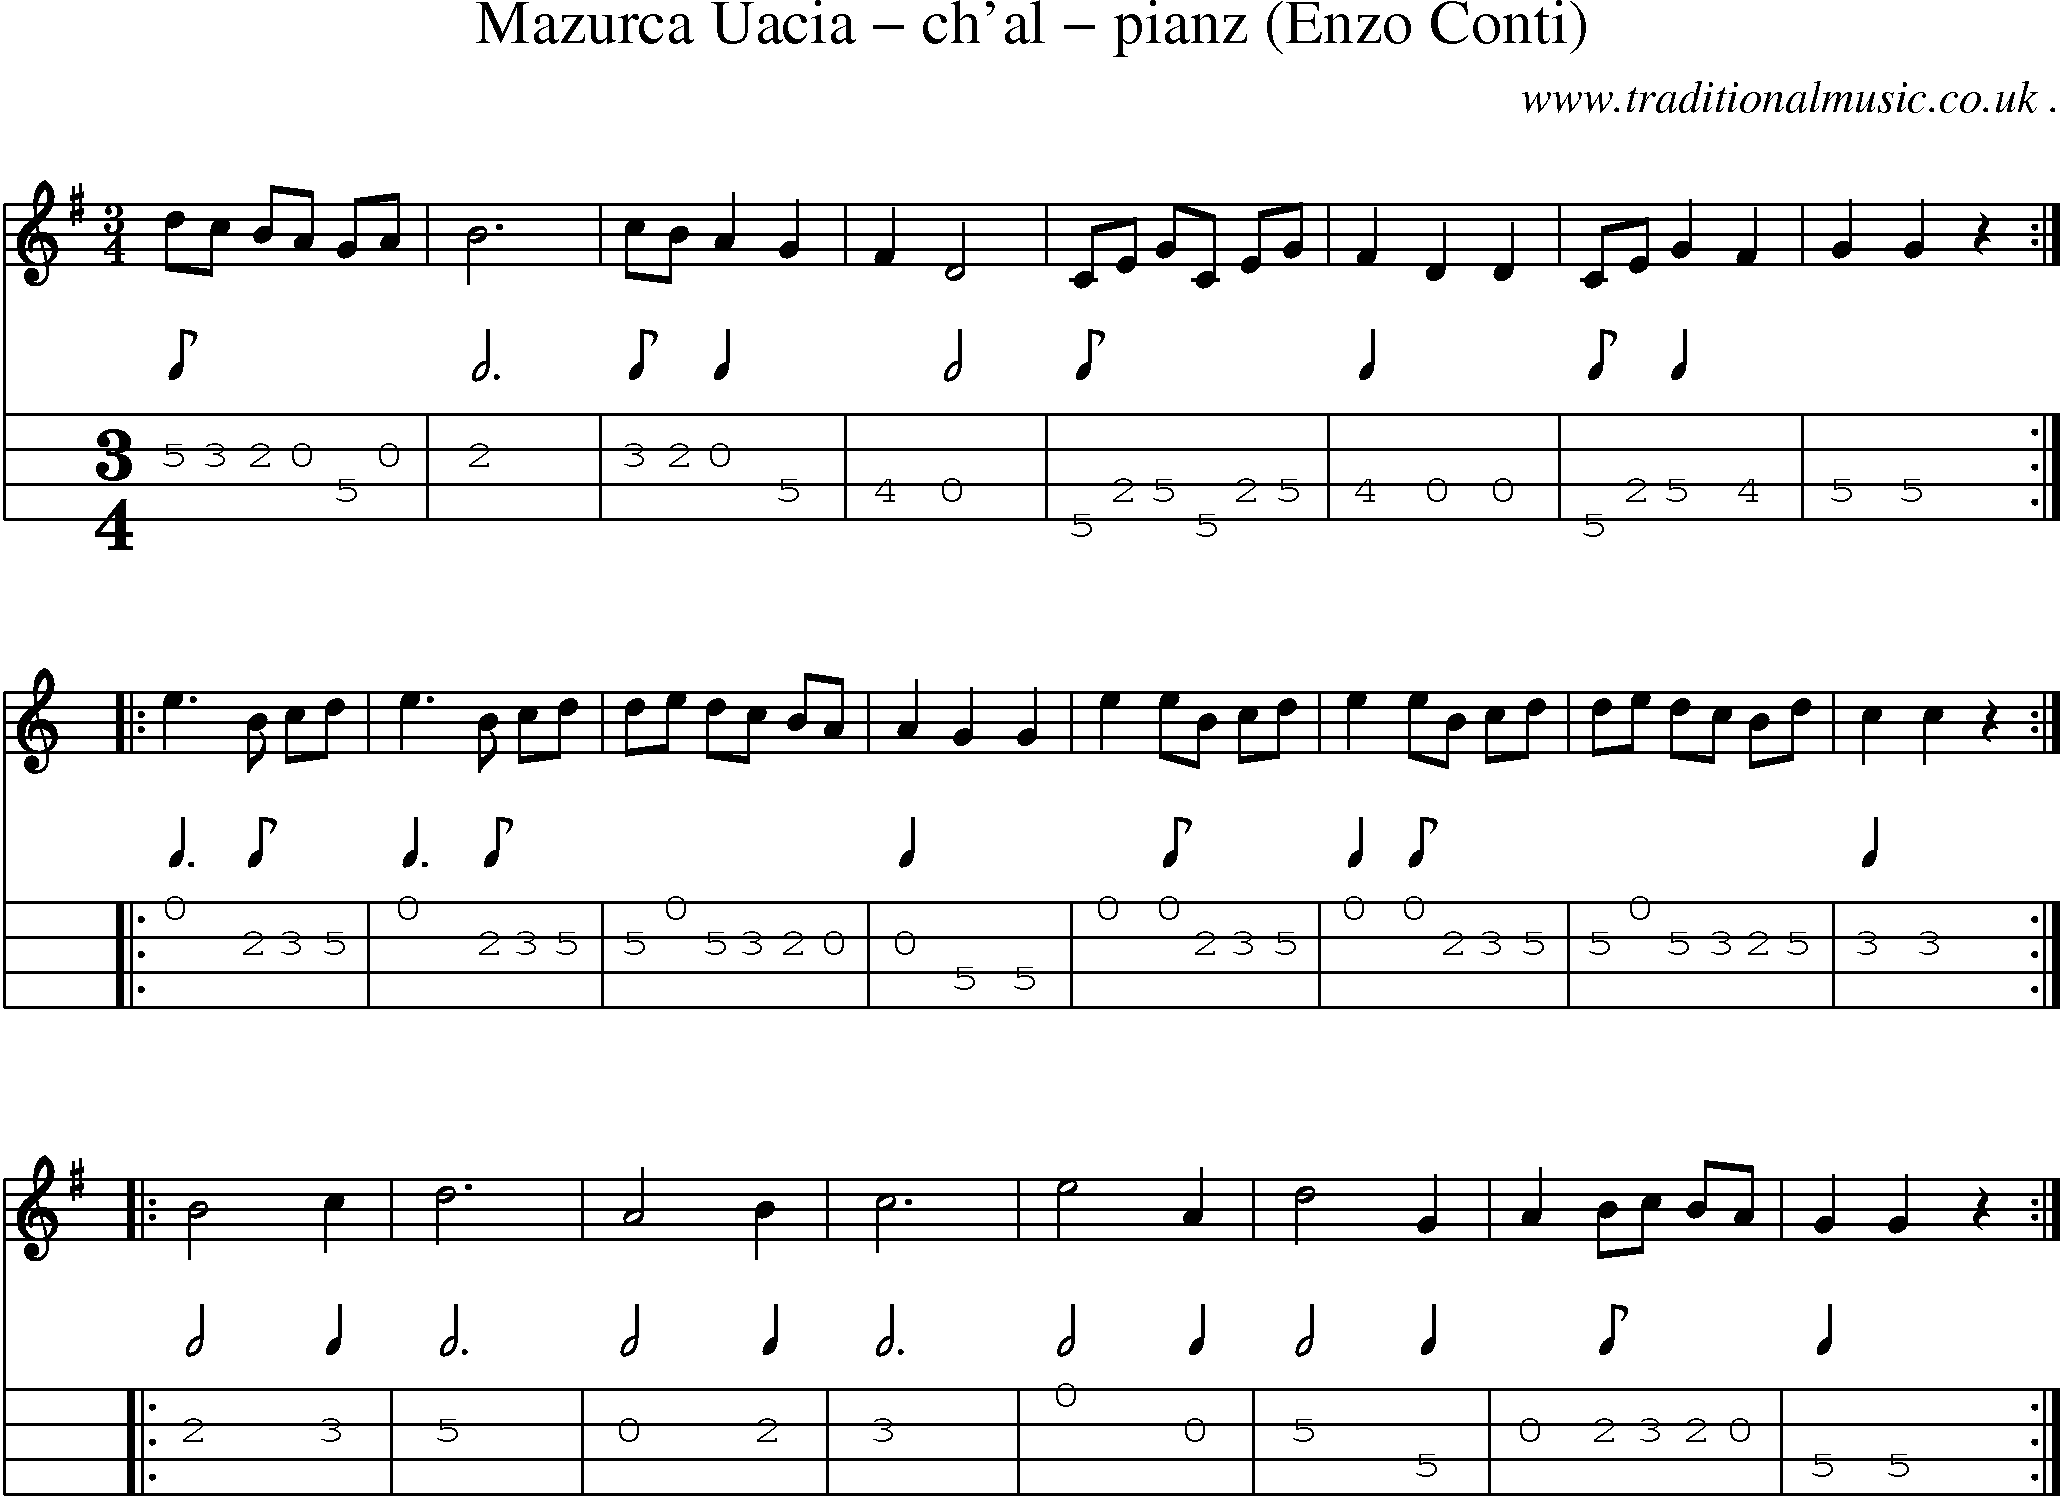 Sheet-Music and Mandolin Tabs for Mazurca Uacia Chal Pianz (enzo Conti)